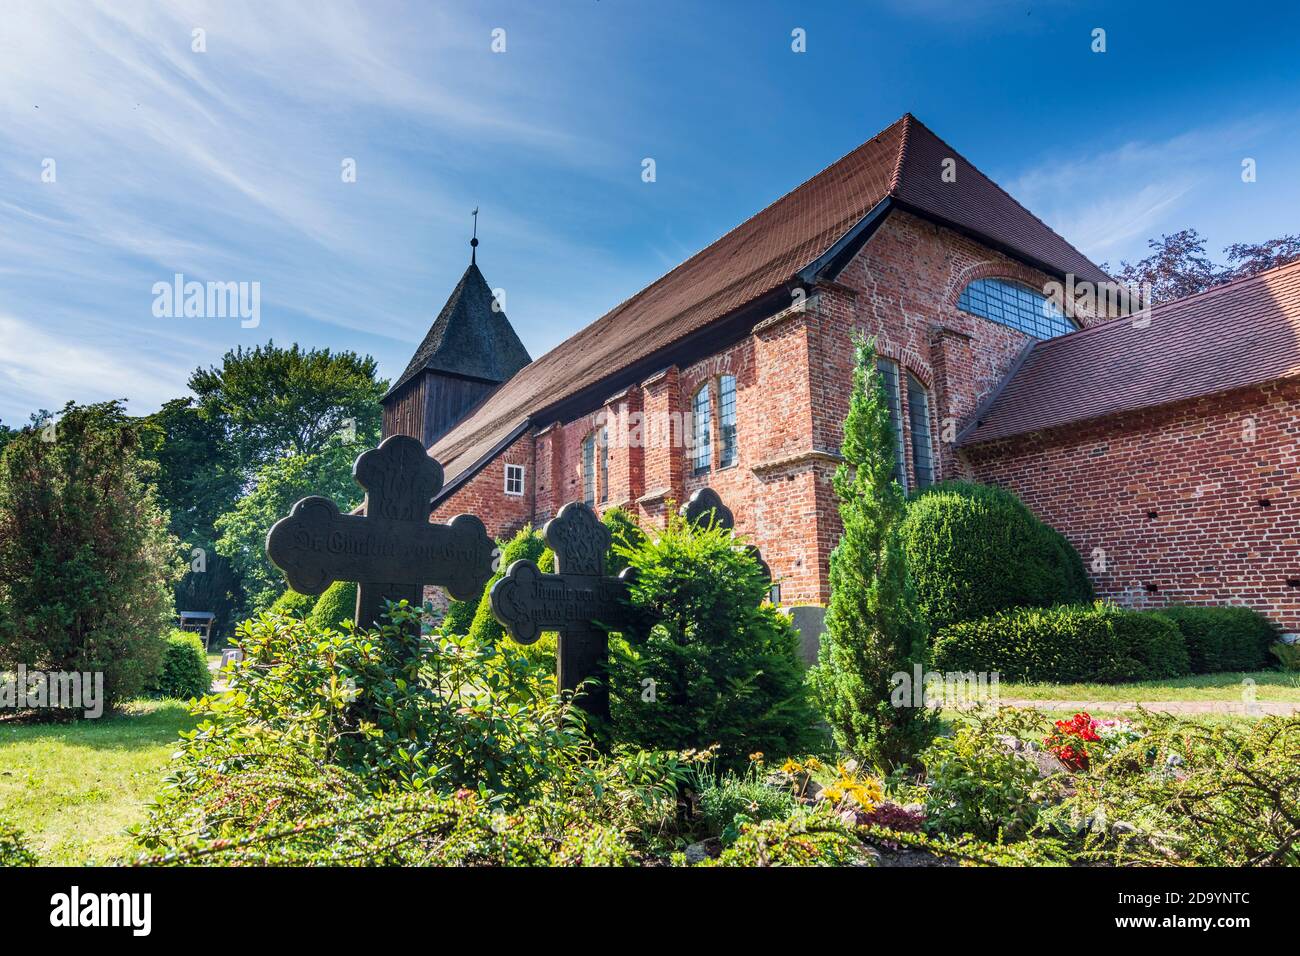 Prerow: Seemannskirche (église des gens de mer), Ostsee (mer Baltique), péninsule de Darß (Darss), Mecklembourg-Poméranie-Occidentale, Allemagne Banque D'Images